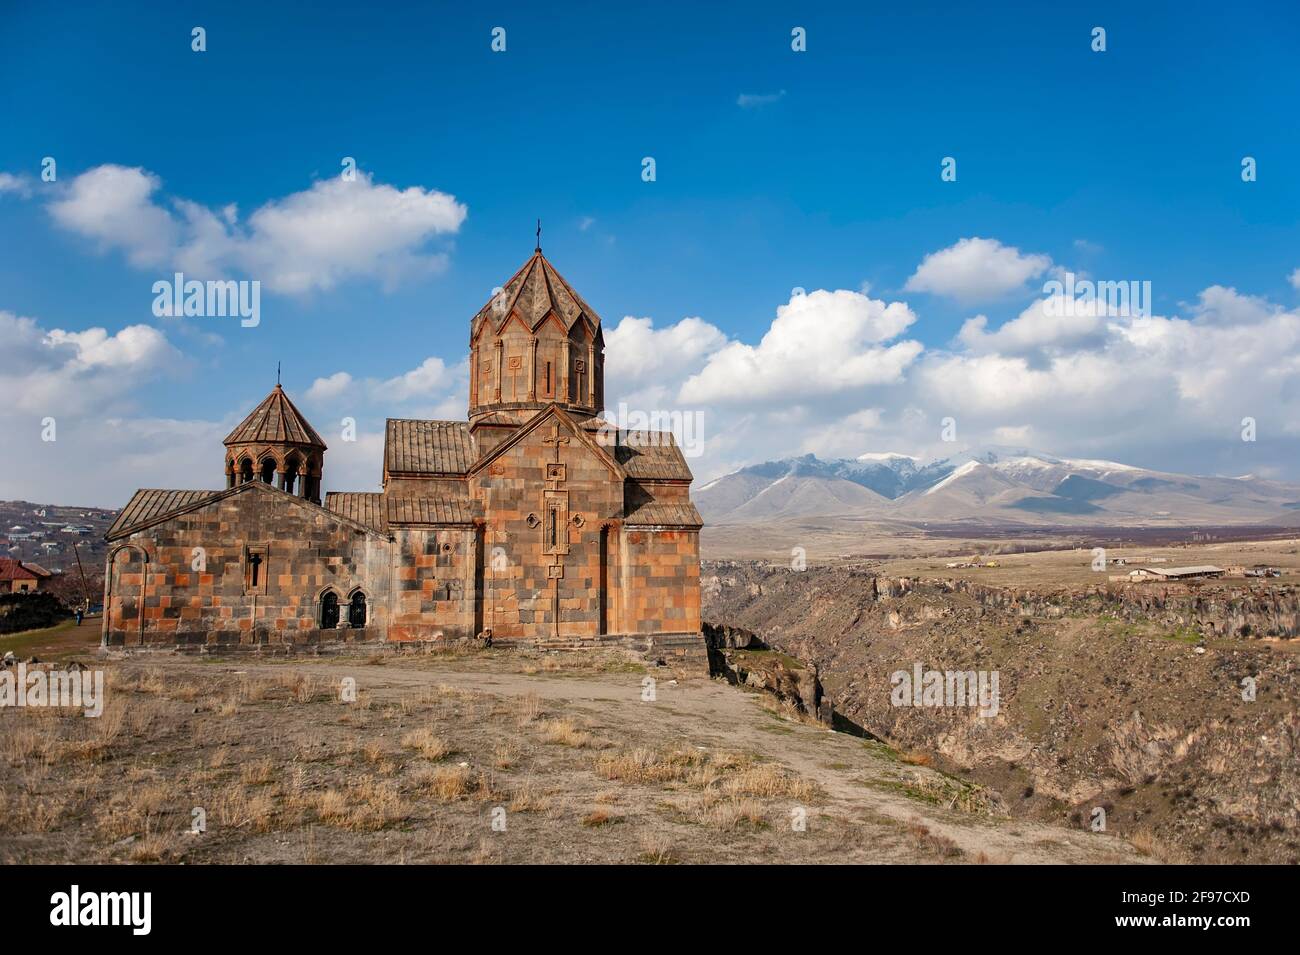 A scenic view of the 13th century Hovhannavank monastery in the village of Ohanavan in Armenia Stock Photo